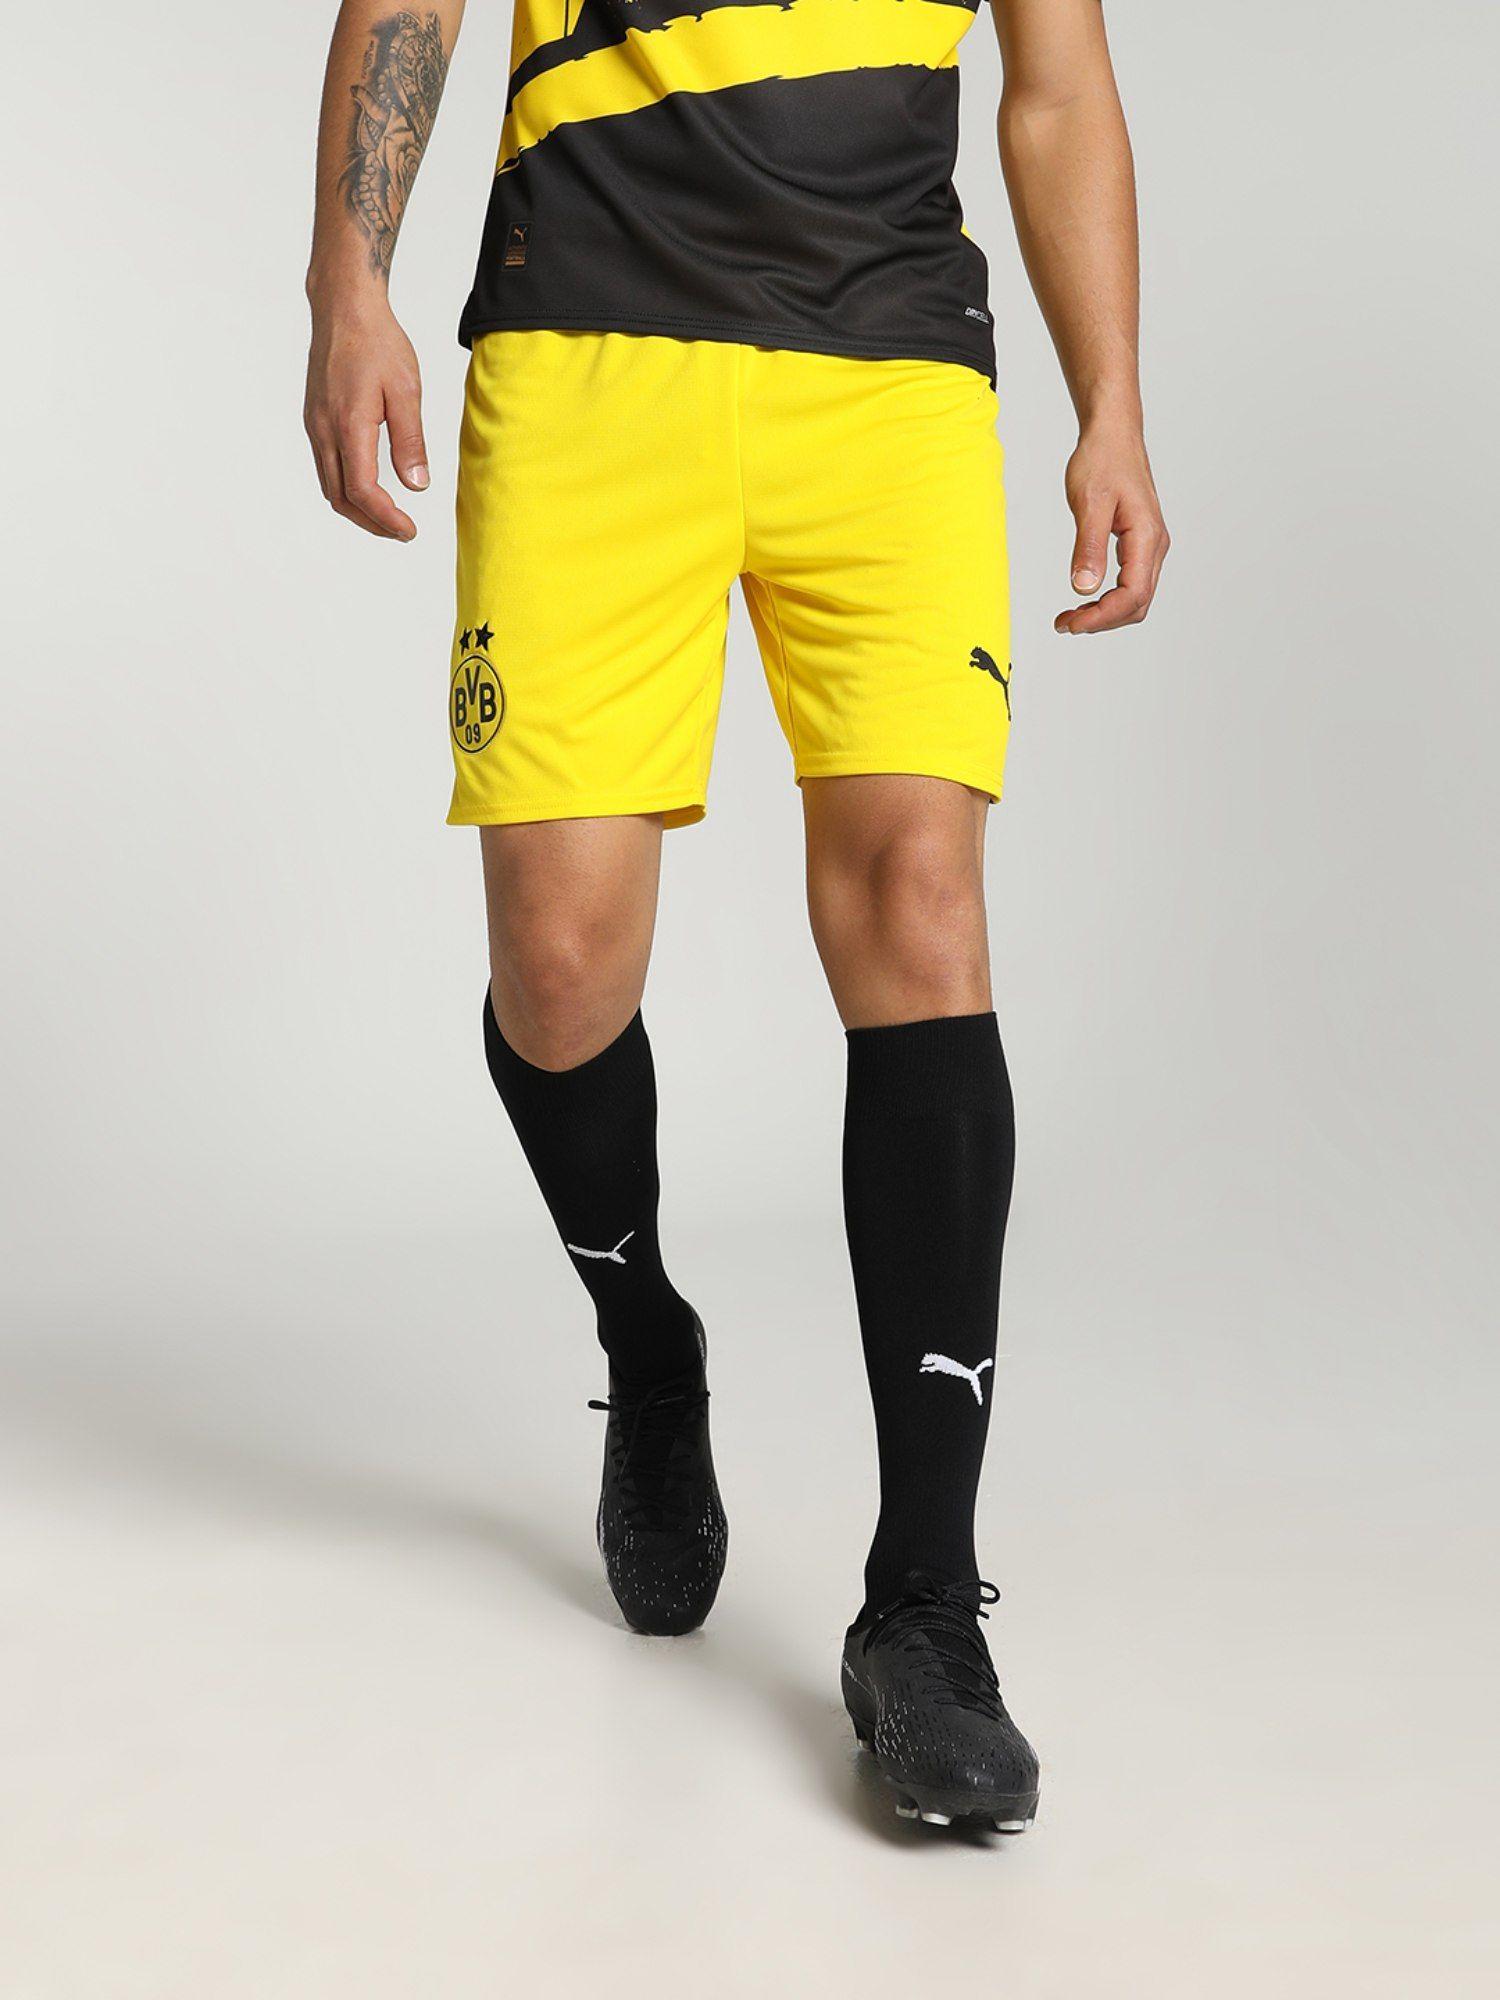 bvb-replica-men-yellow-shorts